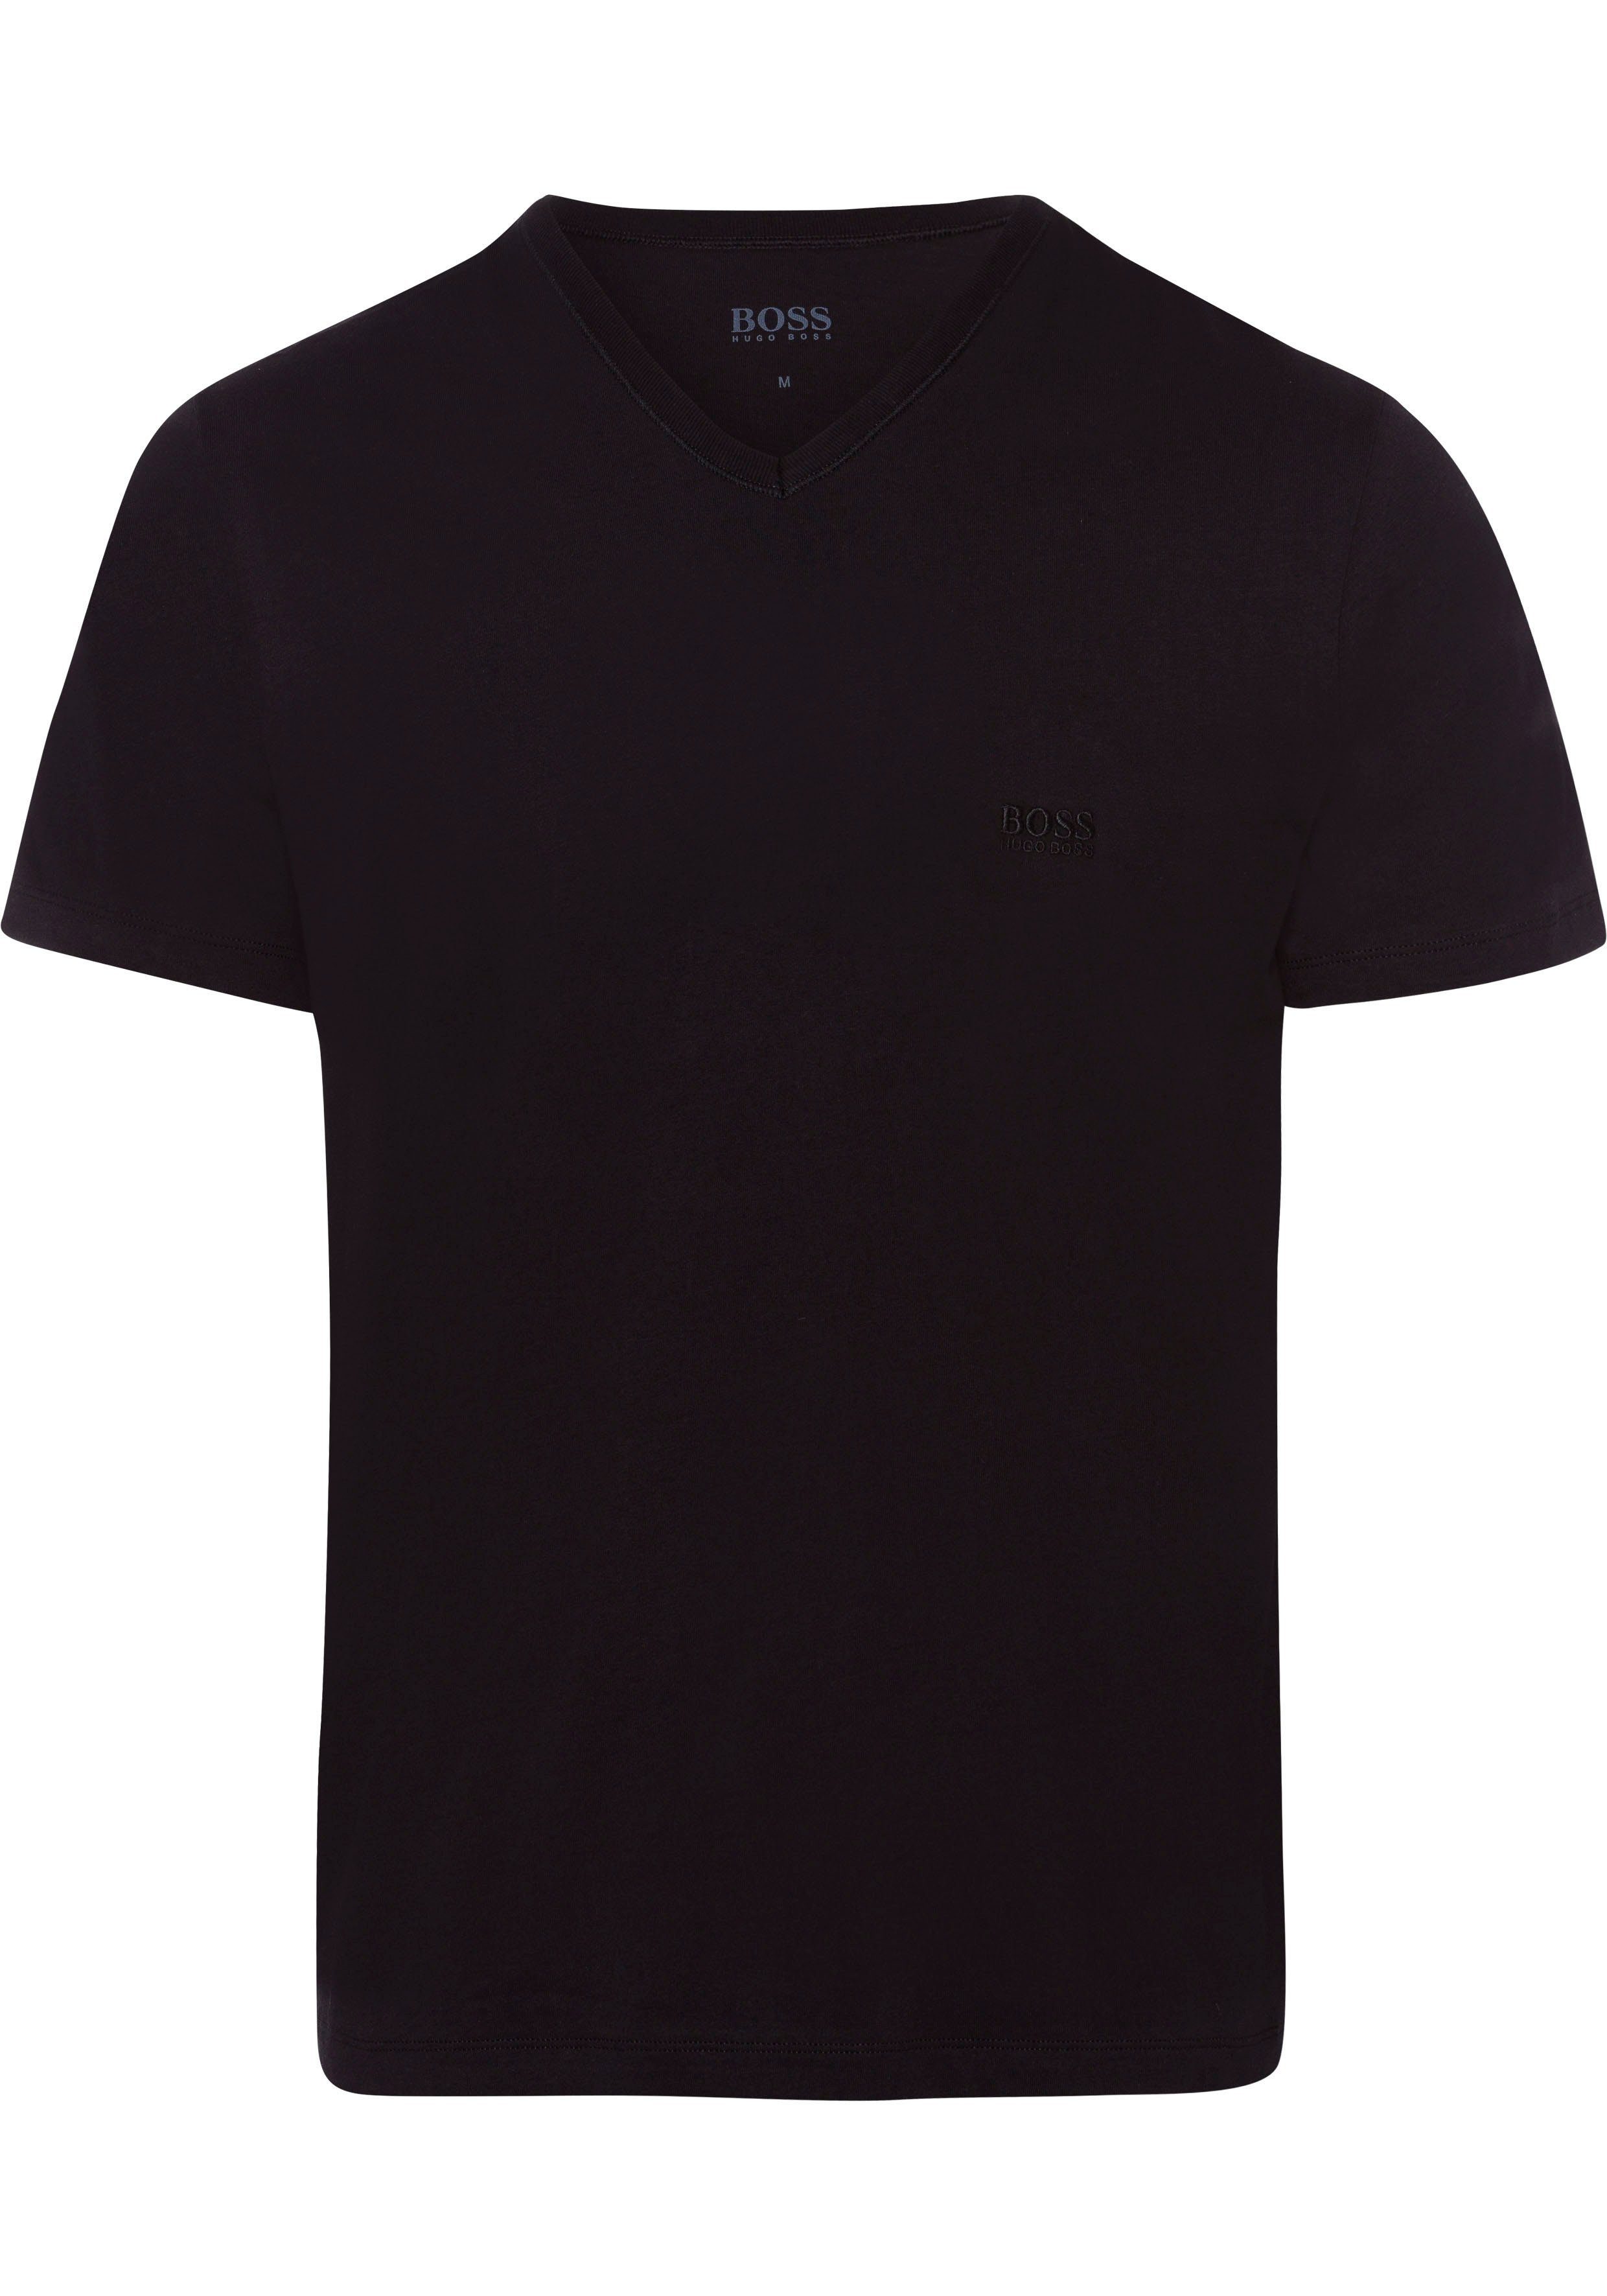 CO (Packung) V-Shirt BOSS 3P black VN T-Shirt